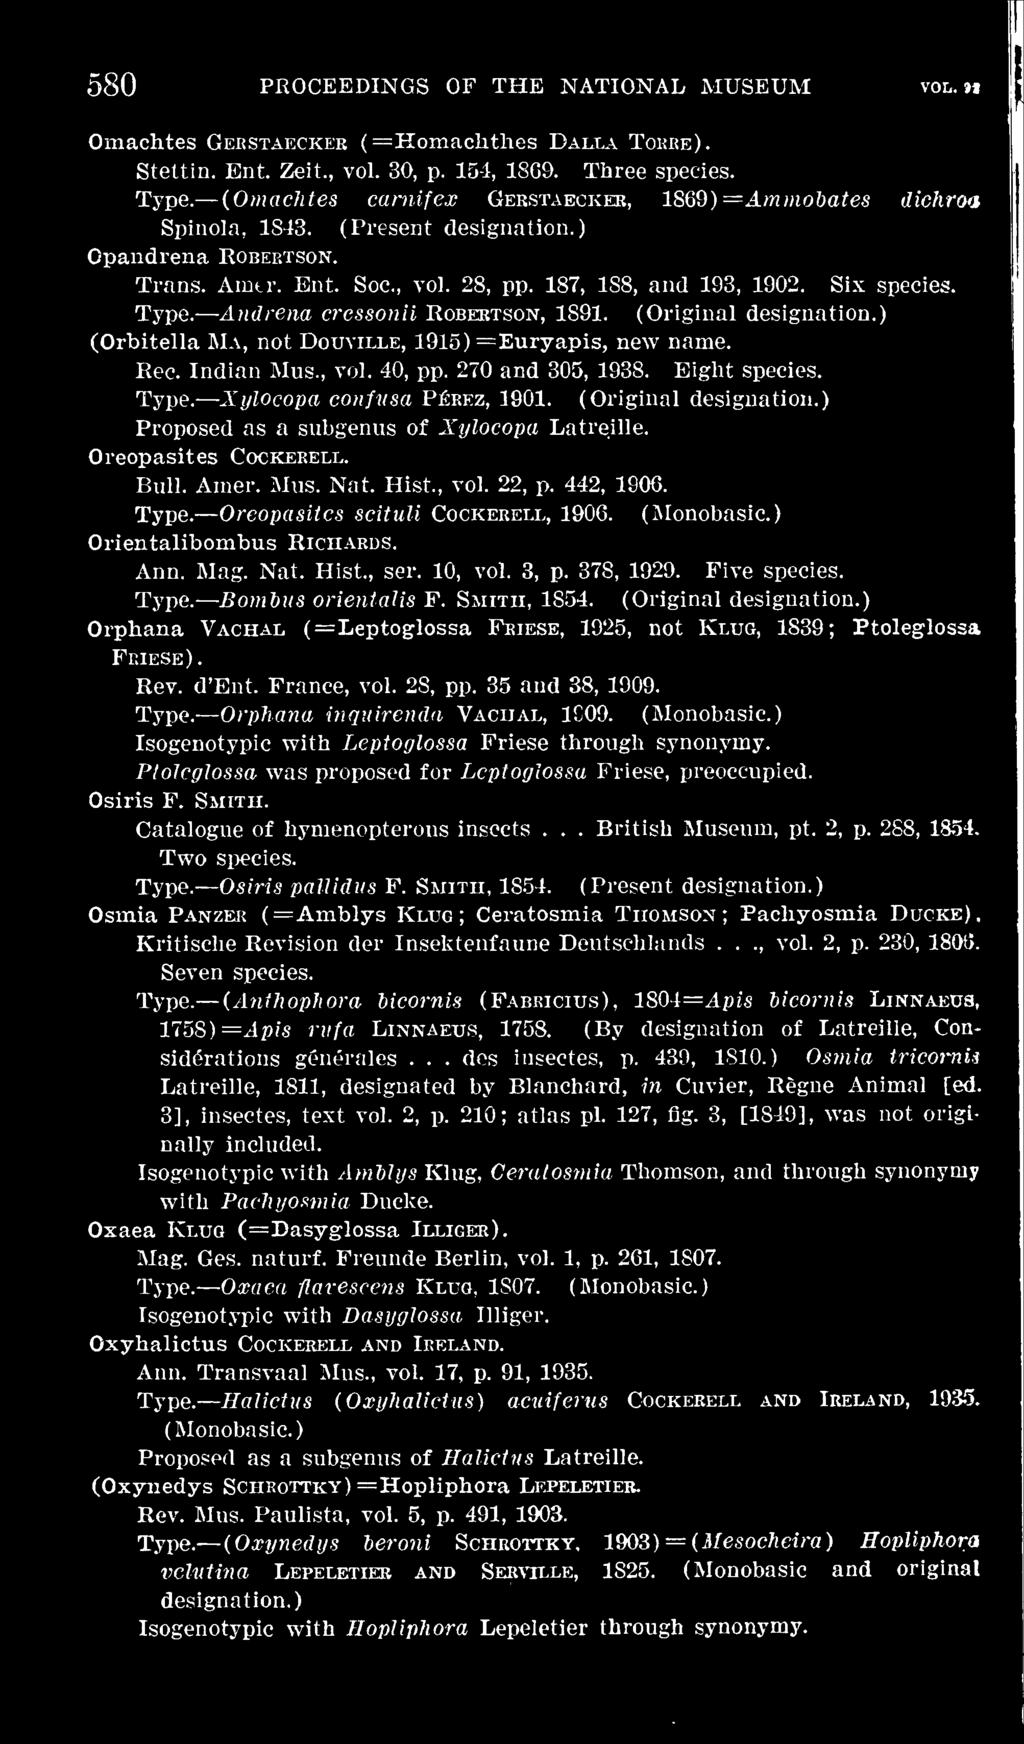 ) Orientalibombus Richards. Ann. Mag. Nat. Hist., ser. 10, vol. 3, p. 378, 1929. Five species. Bonibus orientalis F. Smith, 1854.